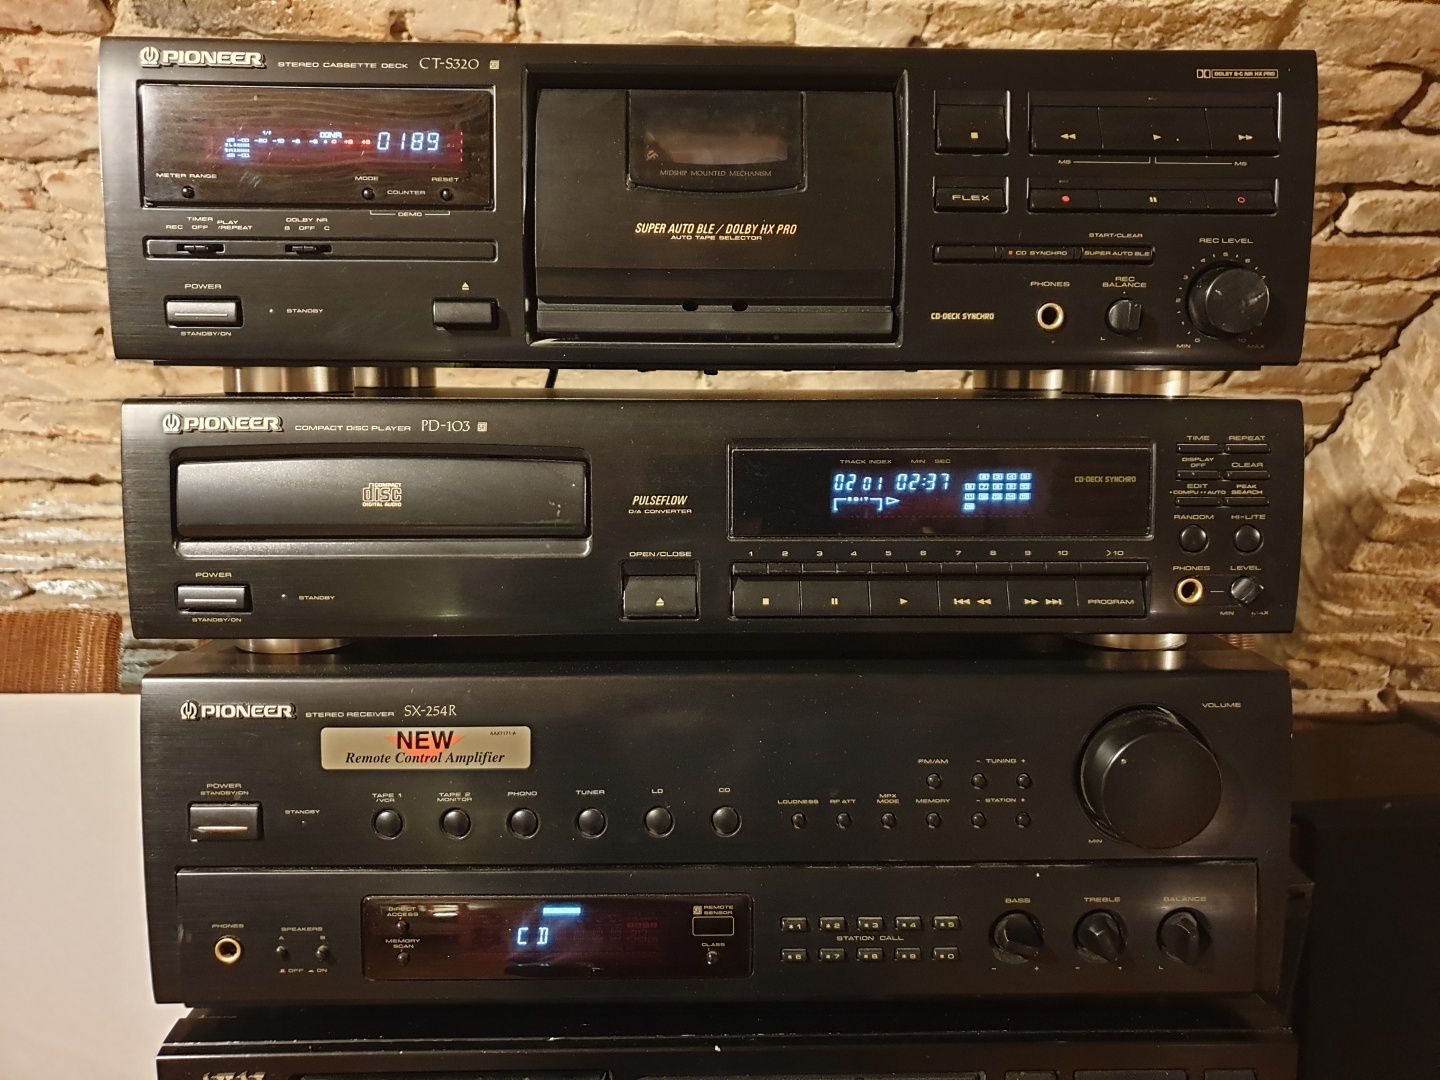 Sisteme audio Magnum A5001/Pioneer/Akai